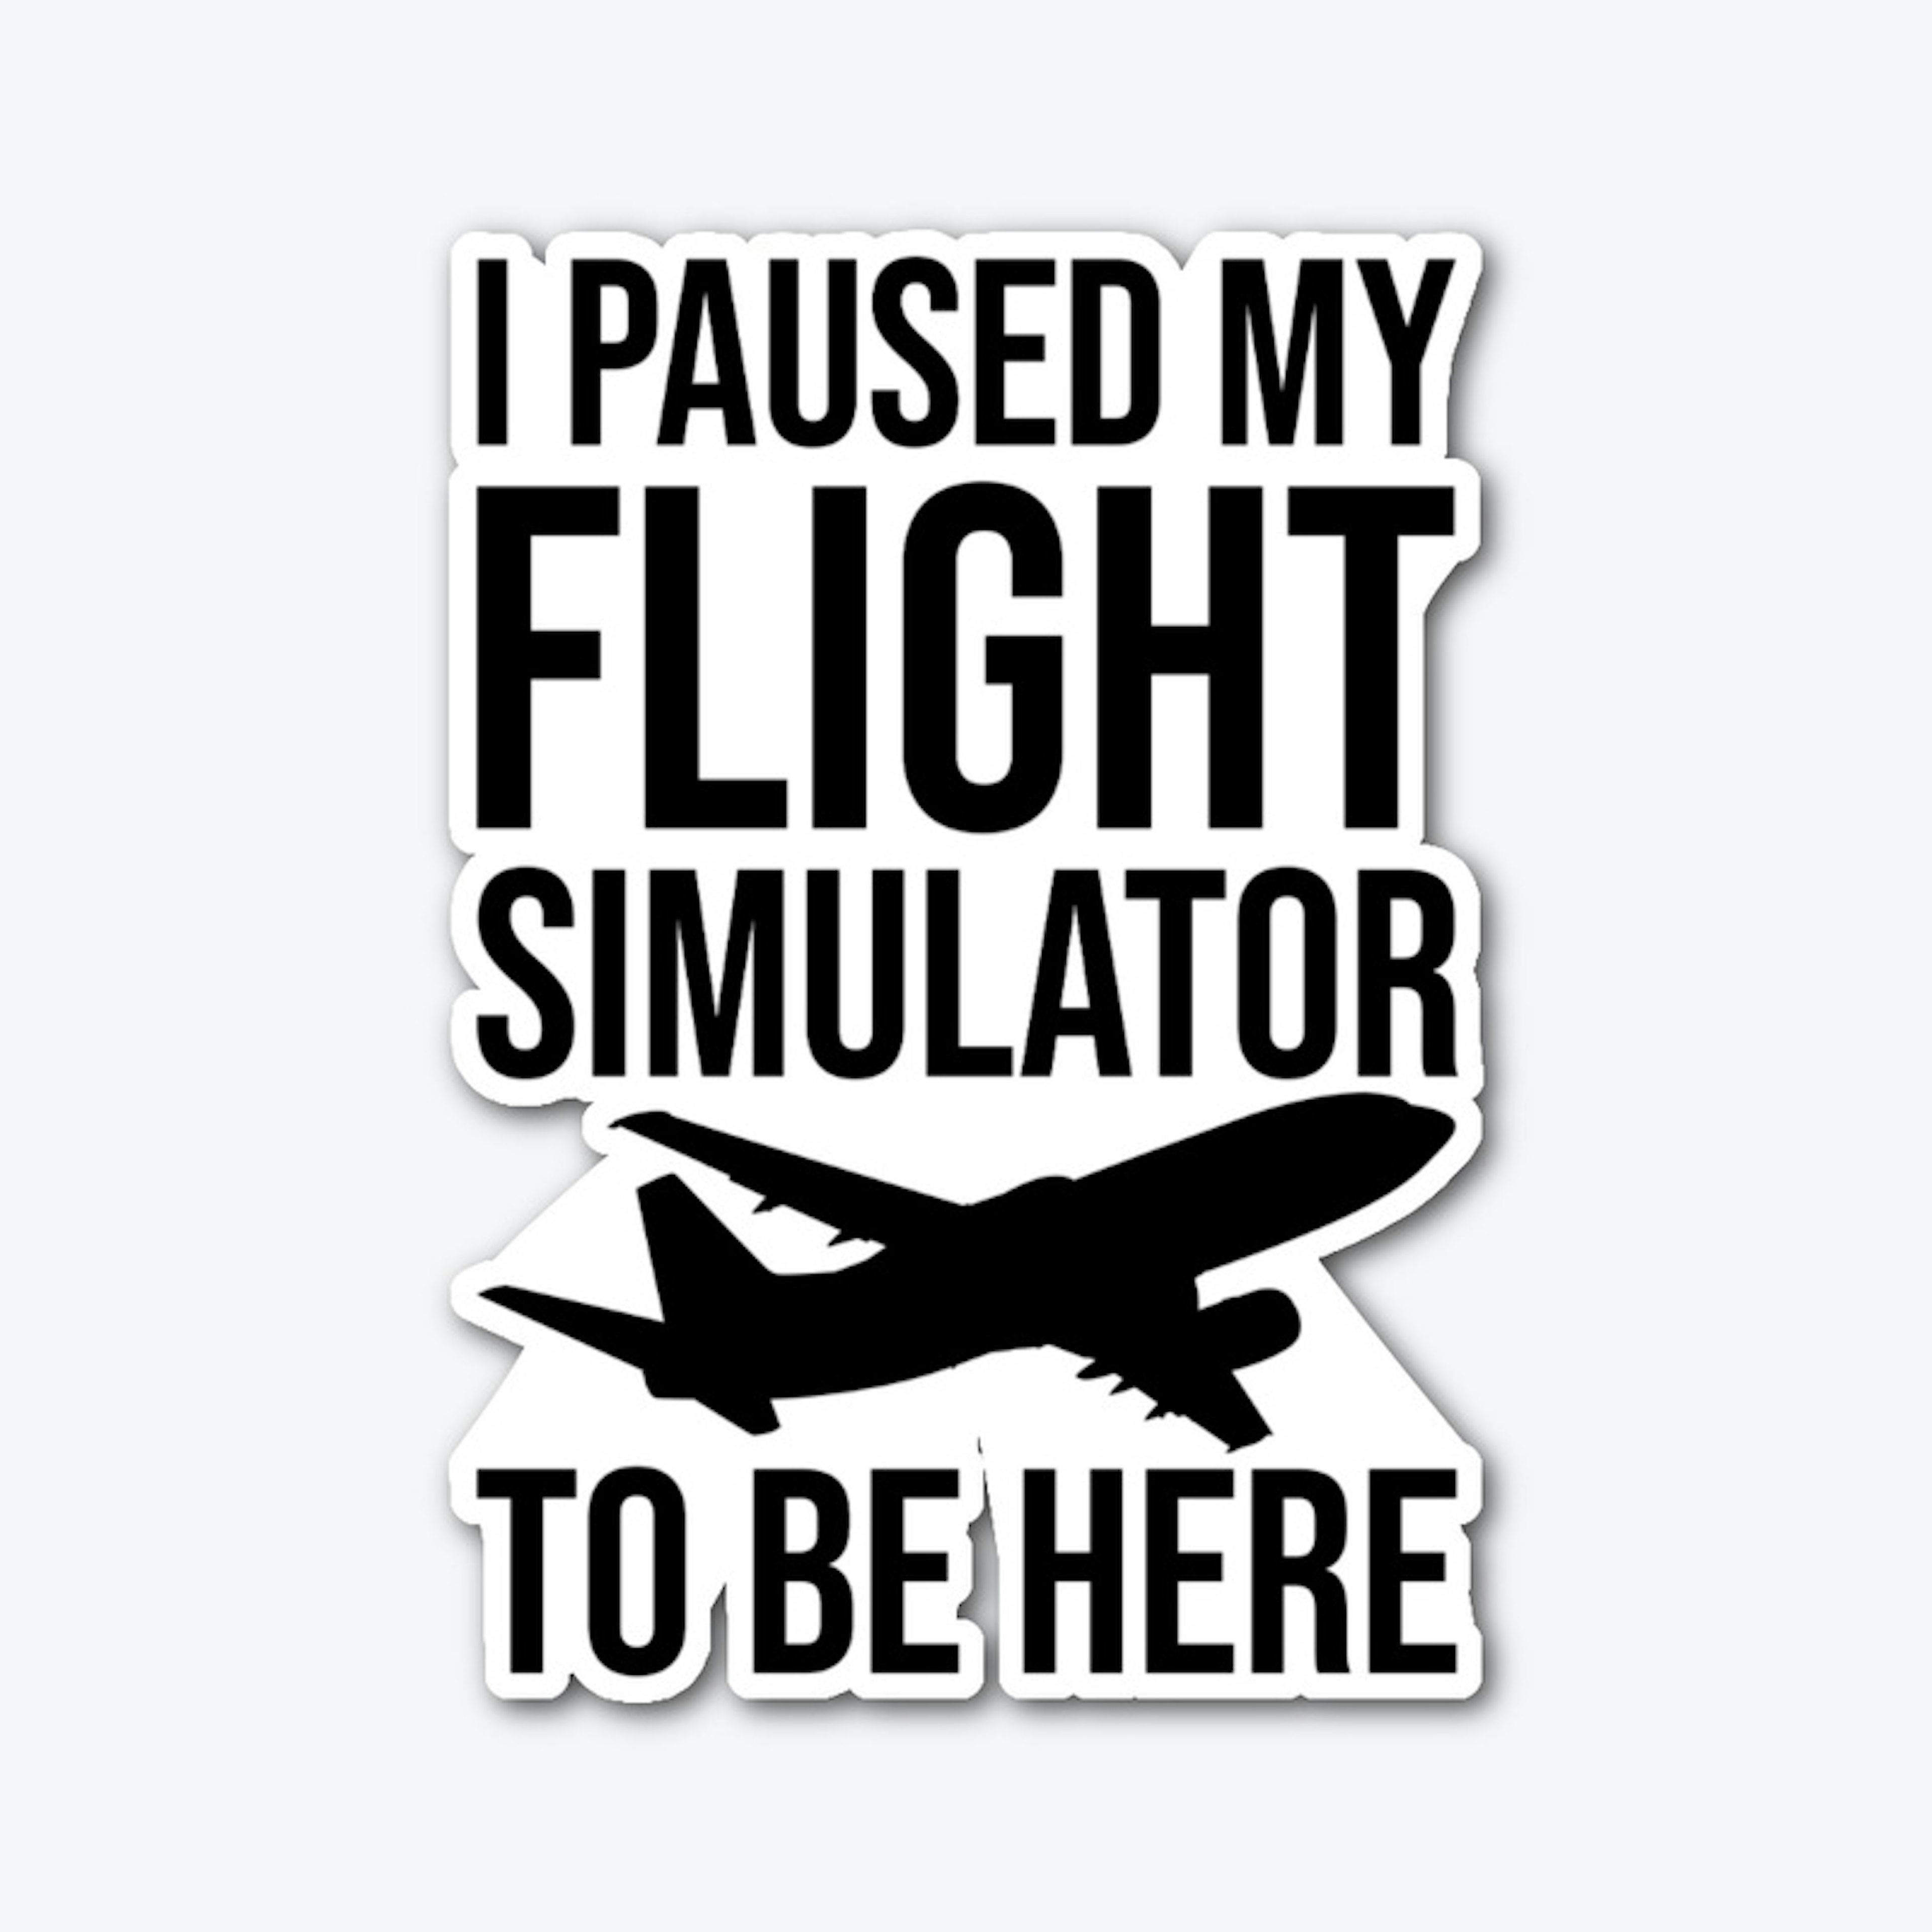 I paused my flight simulator to be here